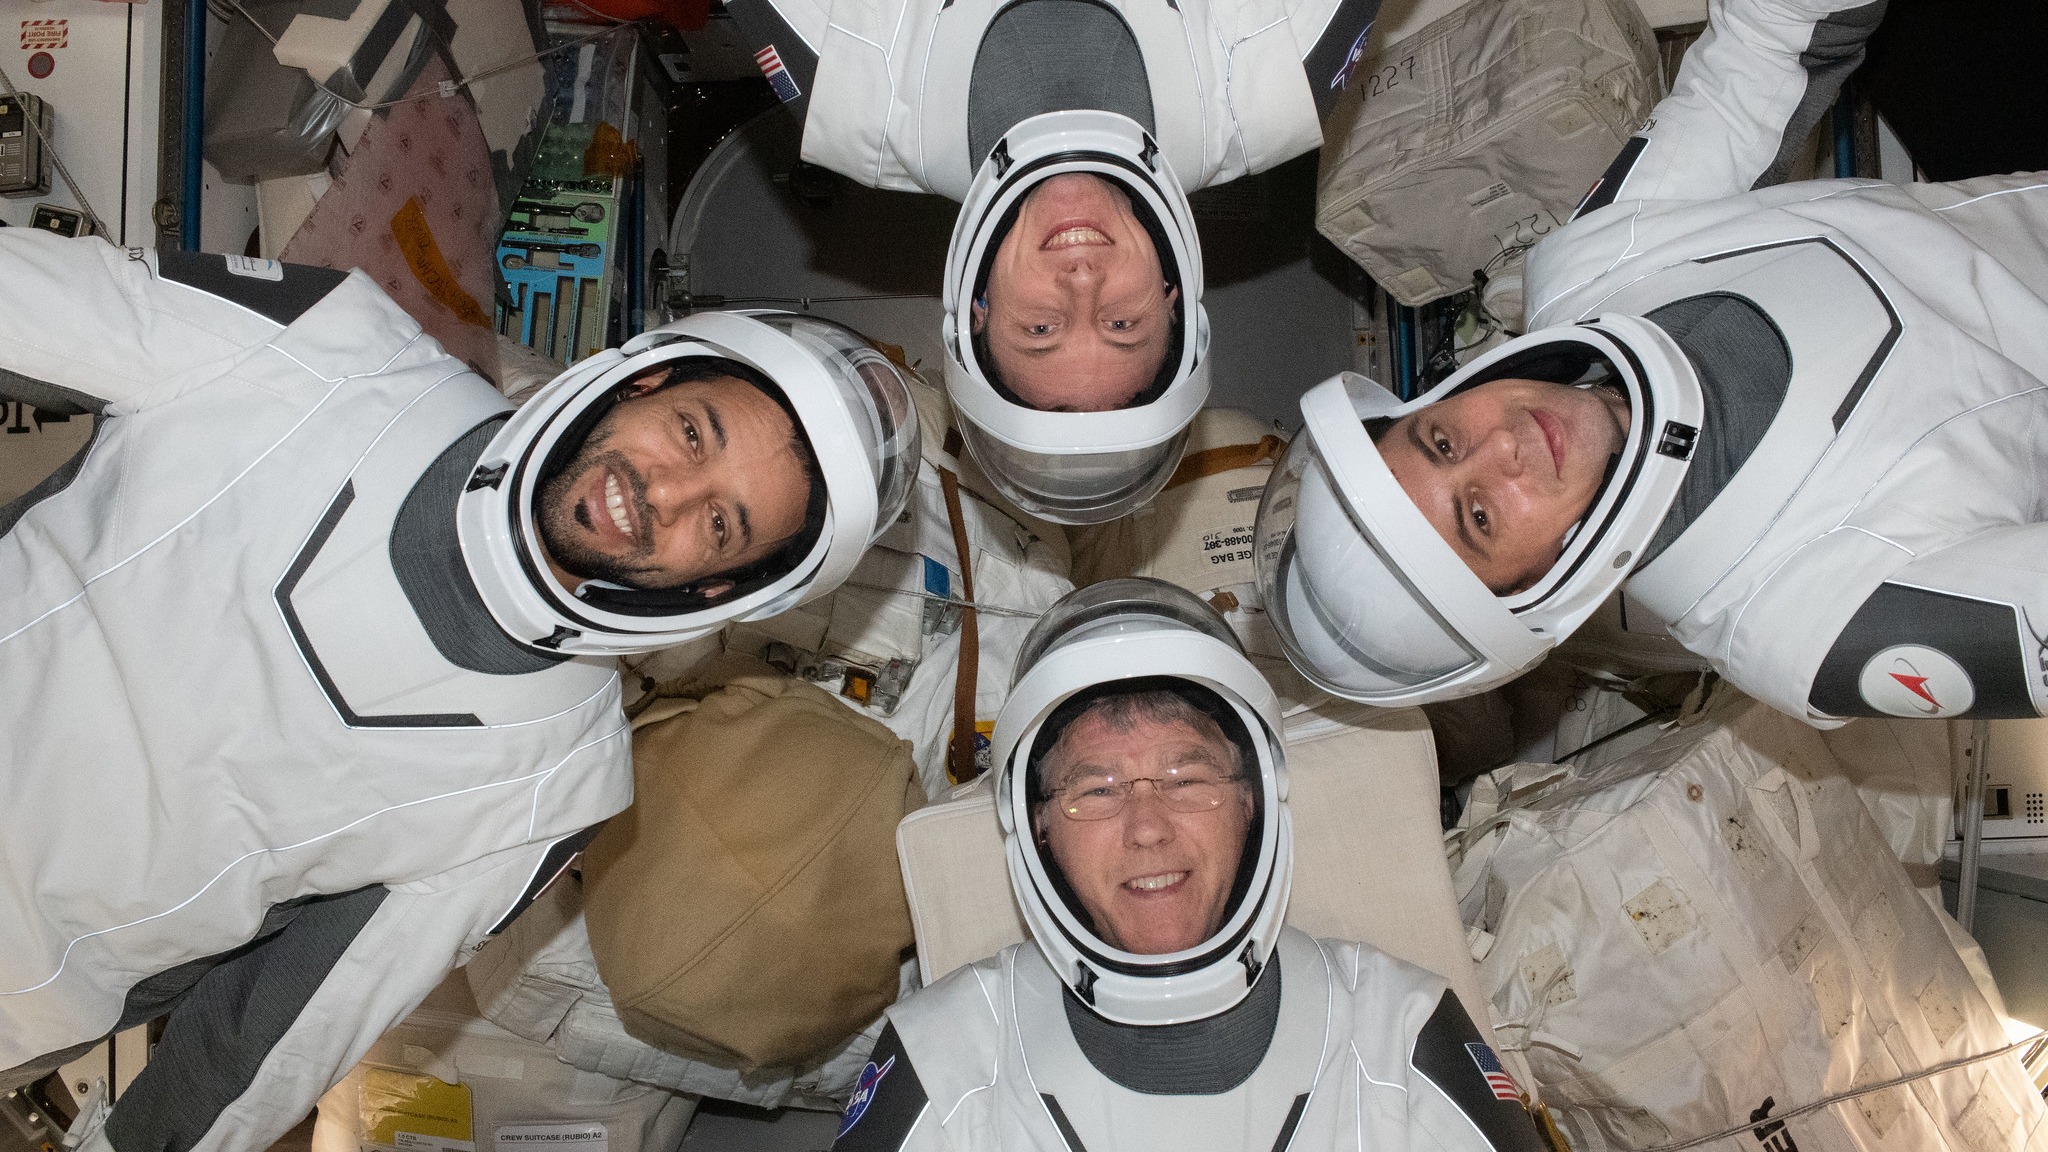 empat astronot mengambang di modul stasiun luar angkasa dengan pakaian antariksa.  mereka terlihat menghadap ke atas dan masing-masing ditempatkan 90 derajat satu sama lain, membentuk lingkaran